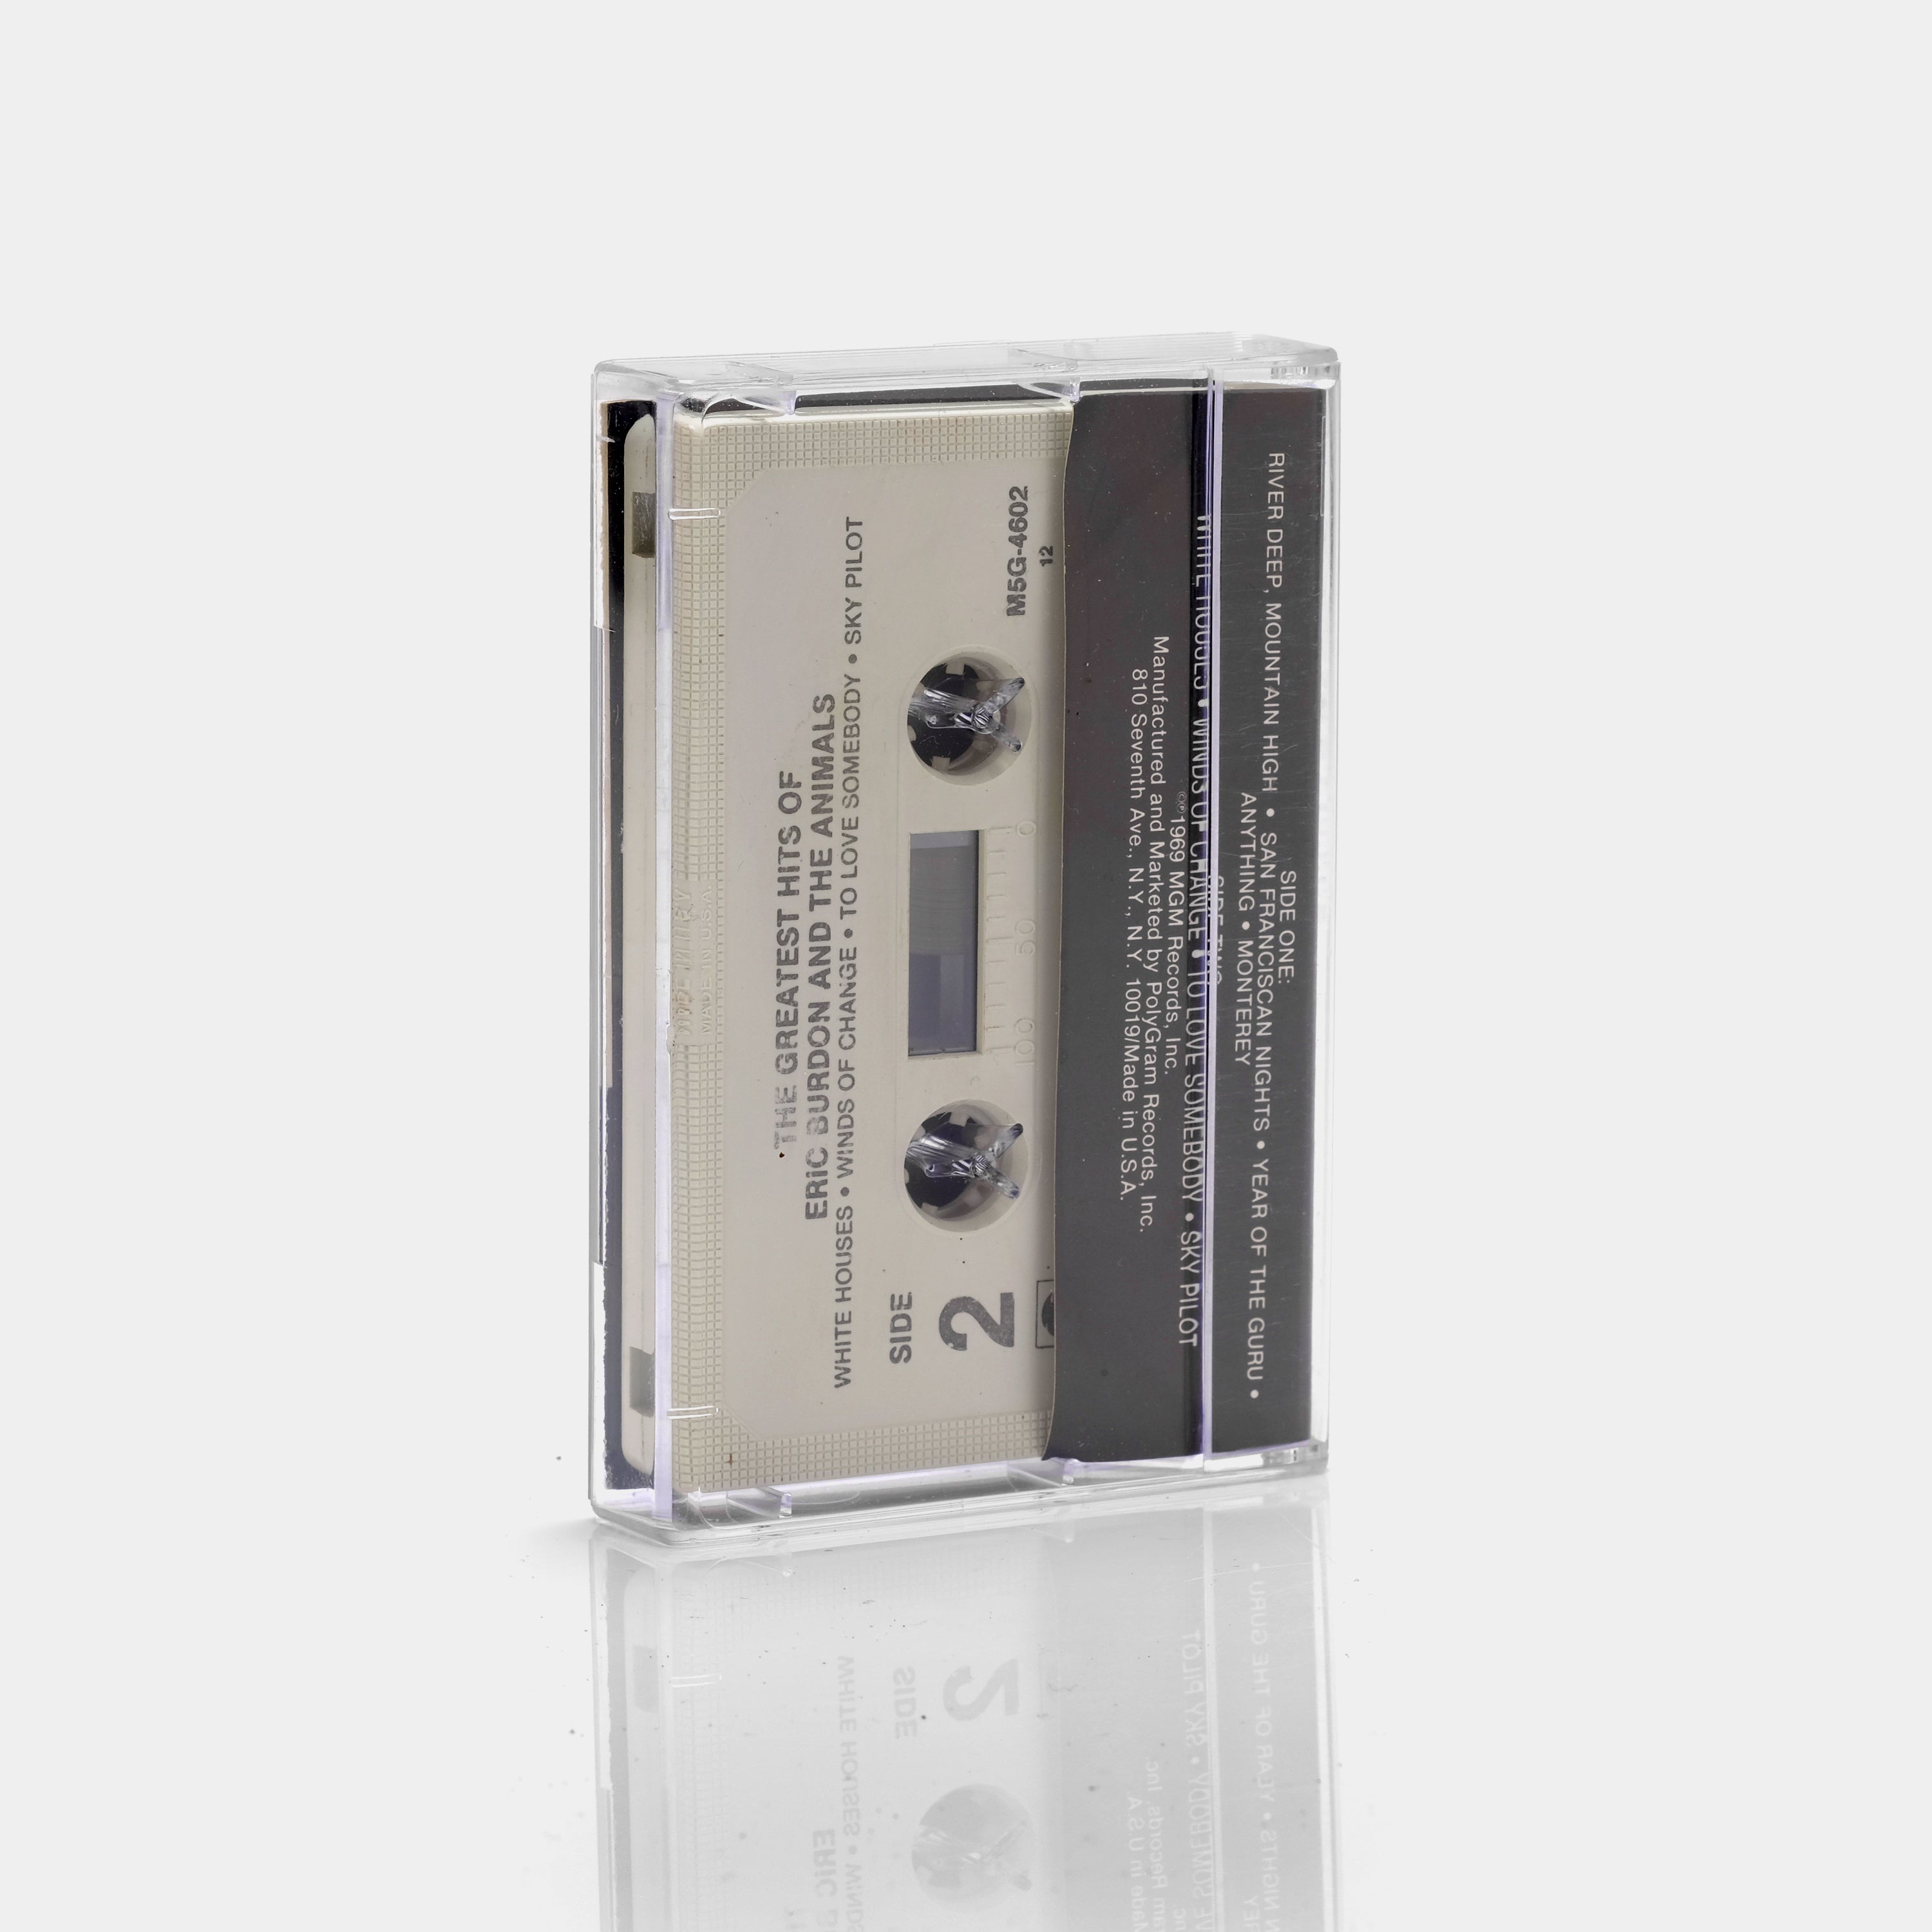 Eric Burdon & The Animals - The Greatest Hits of Eric Burdon & The Animals Cassette Tape